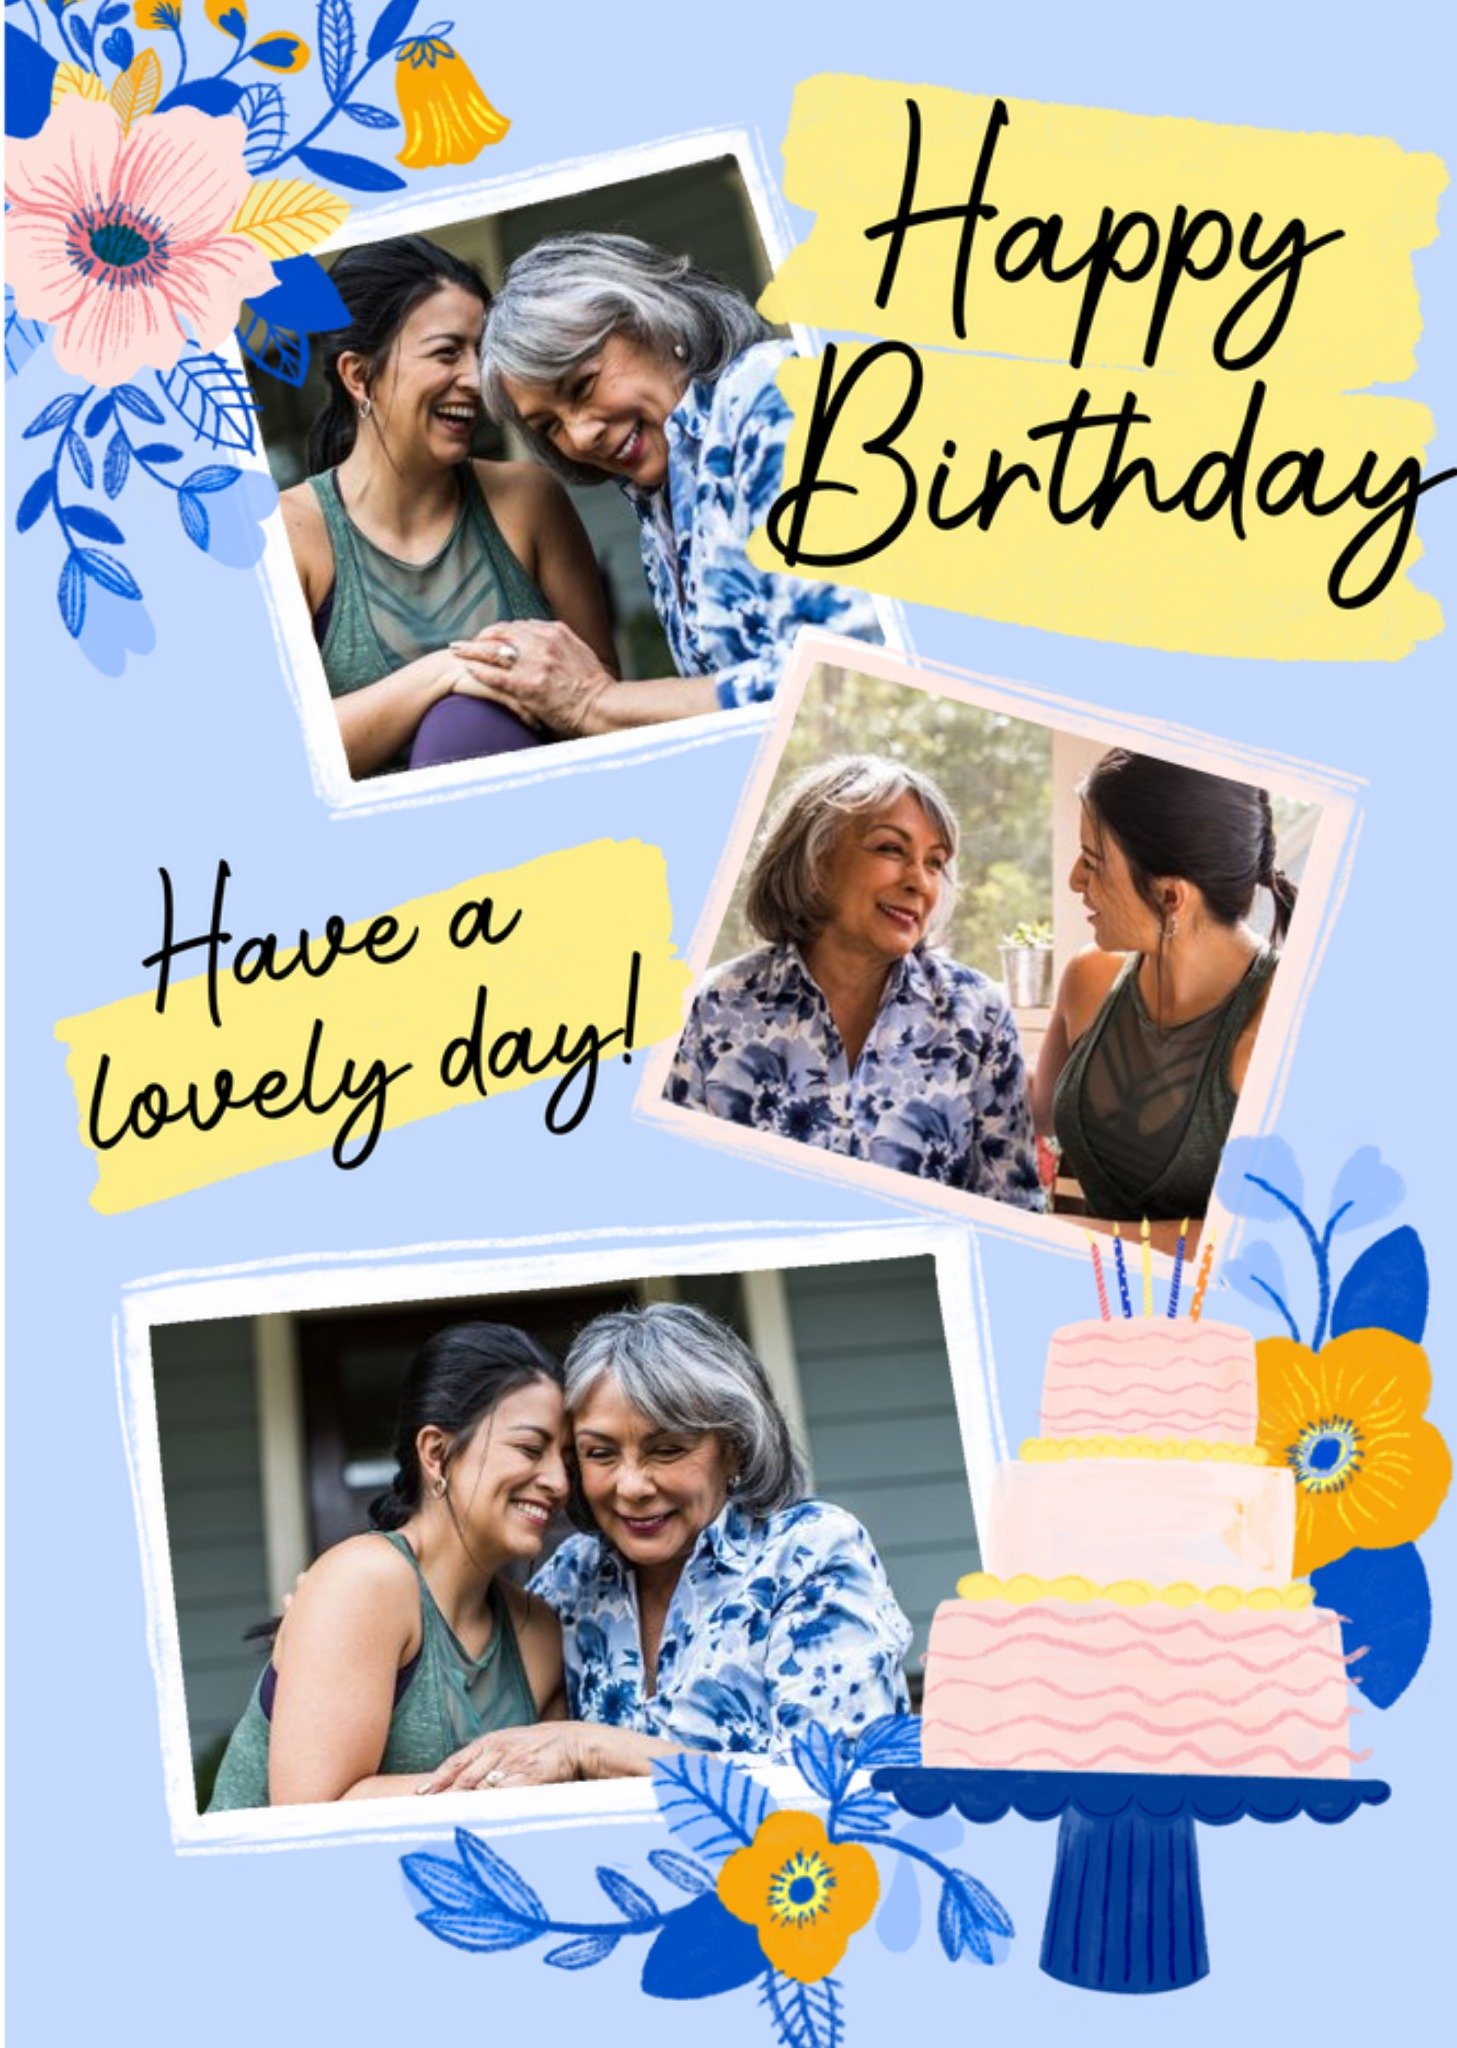 Moonpig Cake And Flower Illustrations Photo Upload Birthday Card Ecard